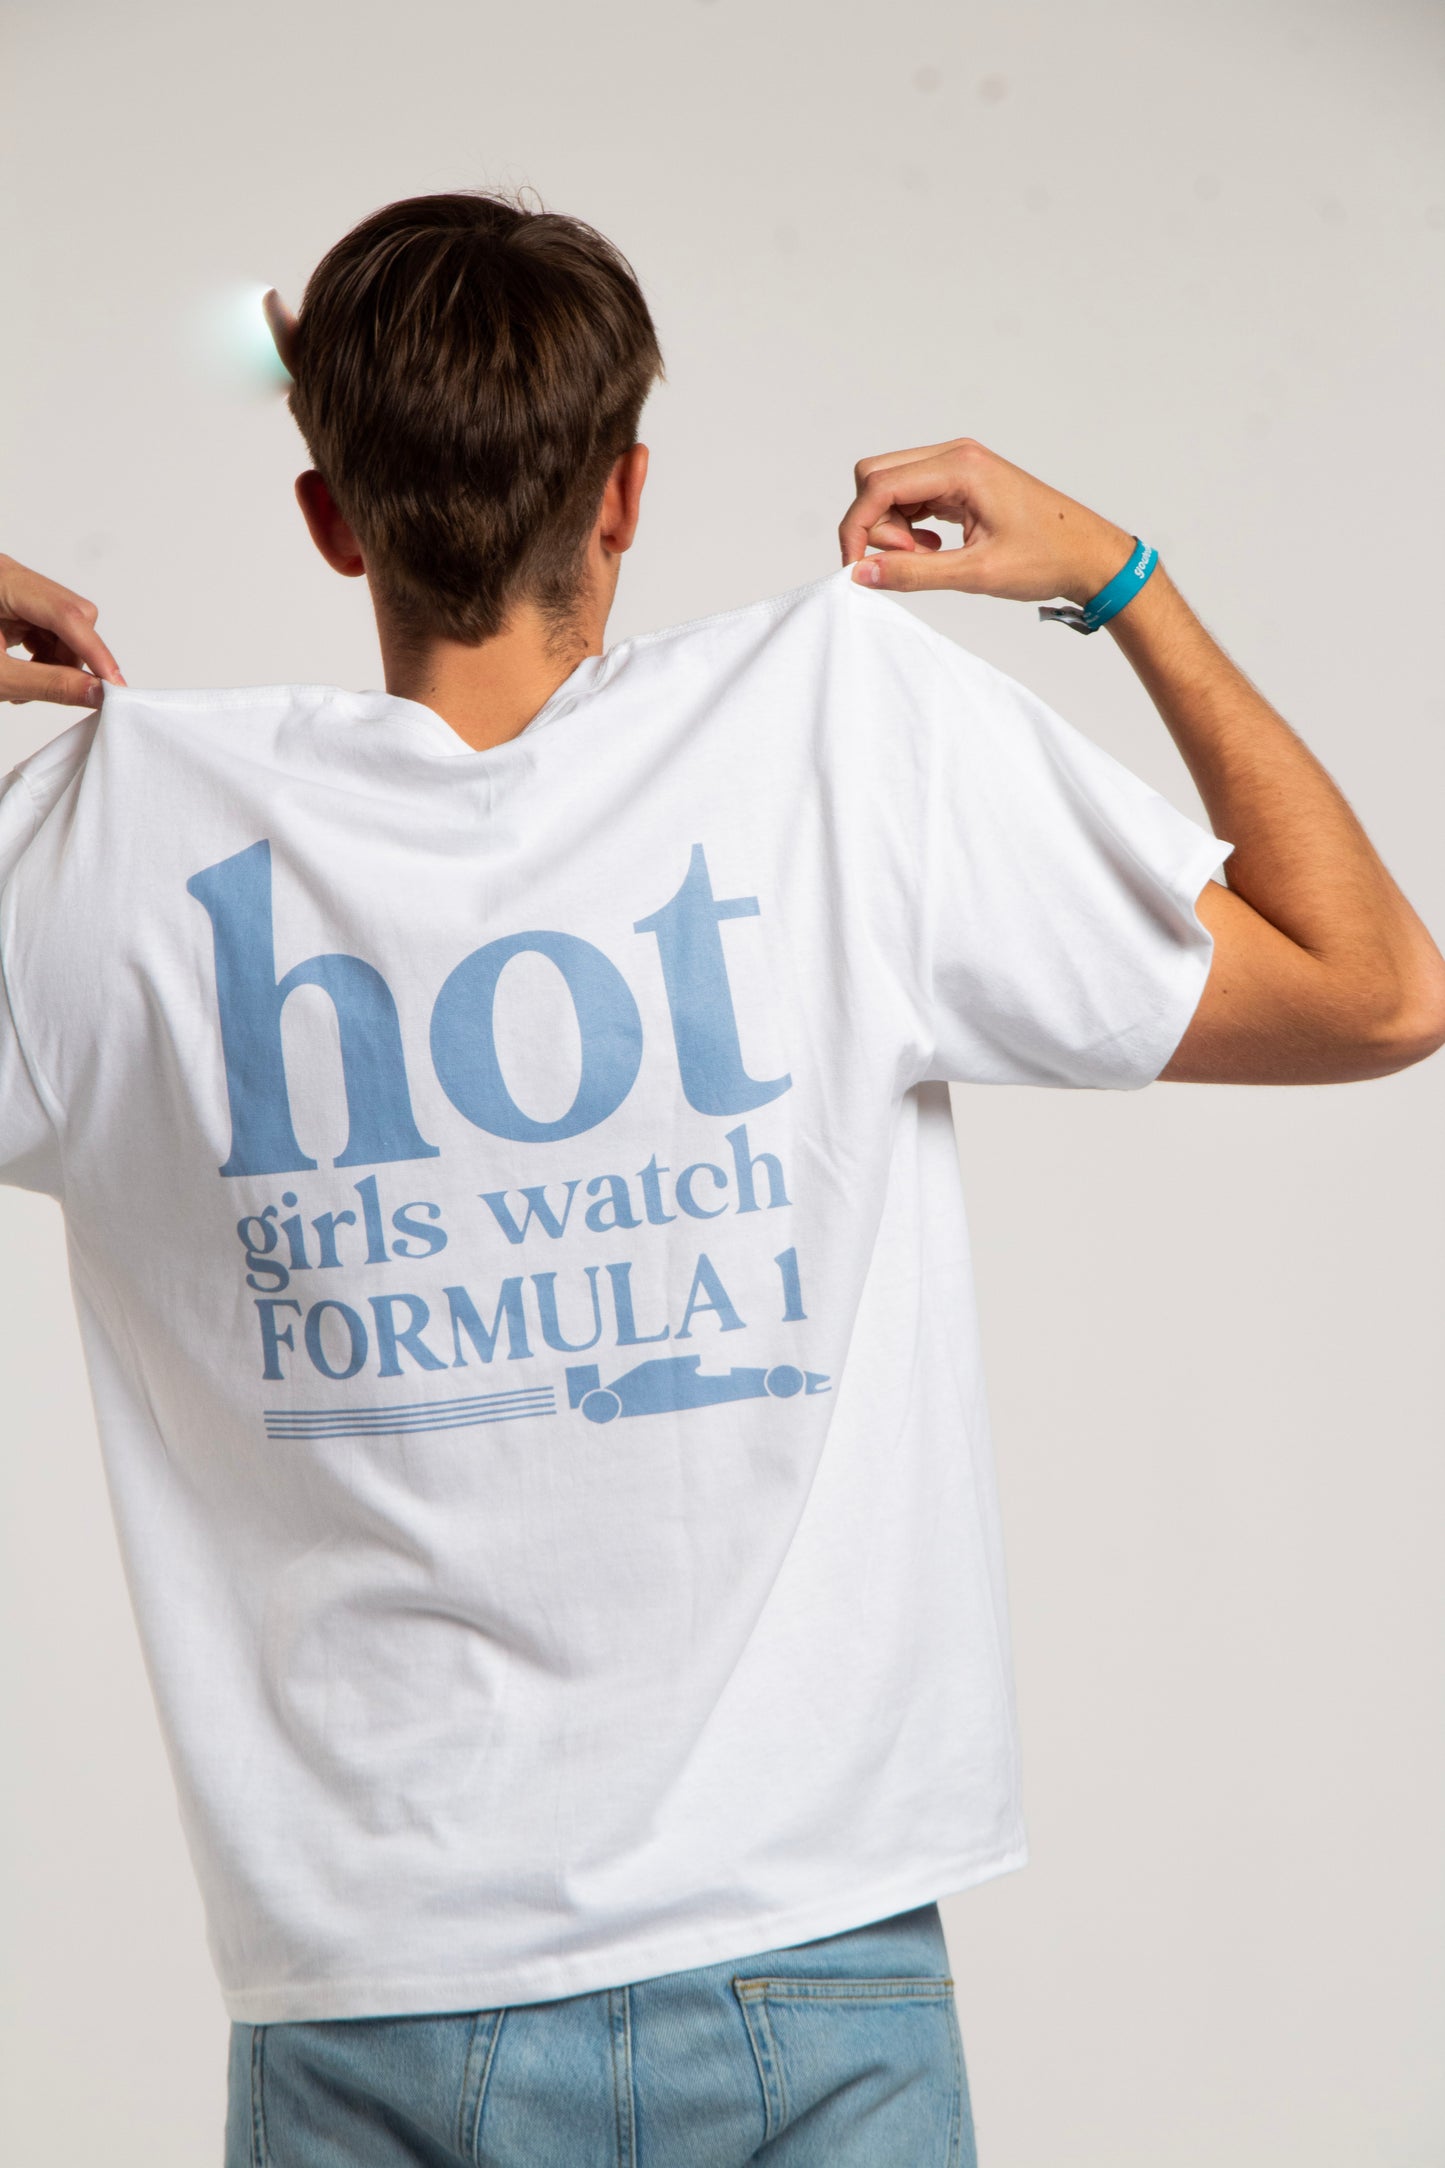 T-shirt "Hot girls watch Formula 1" Blue Edition Exclusive Tee